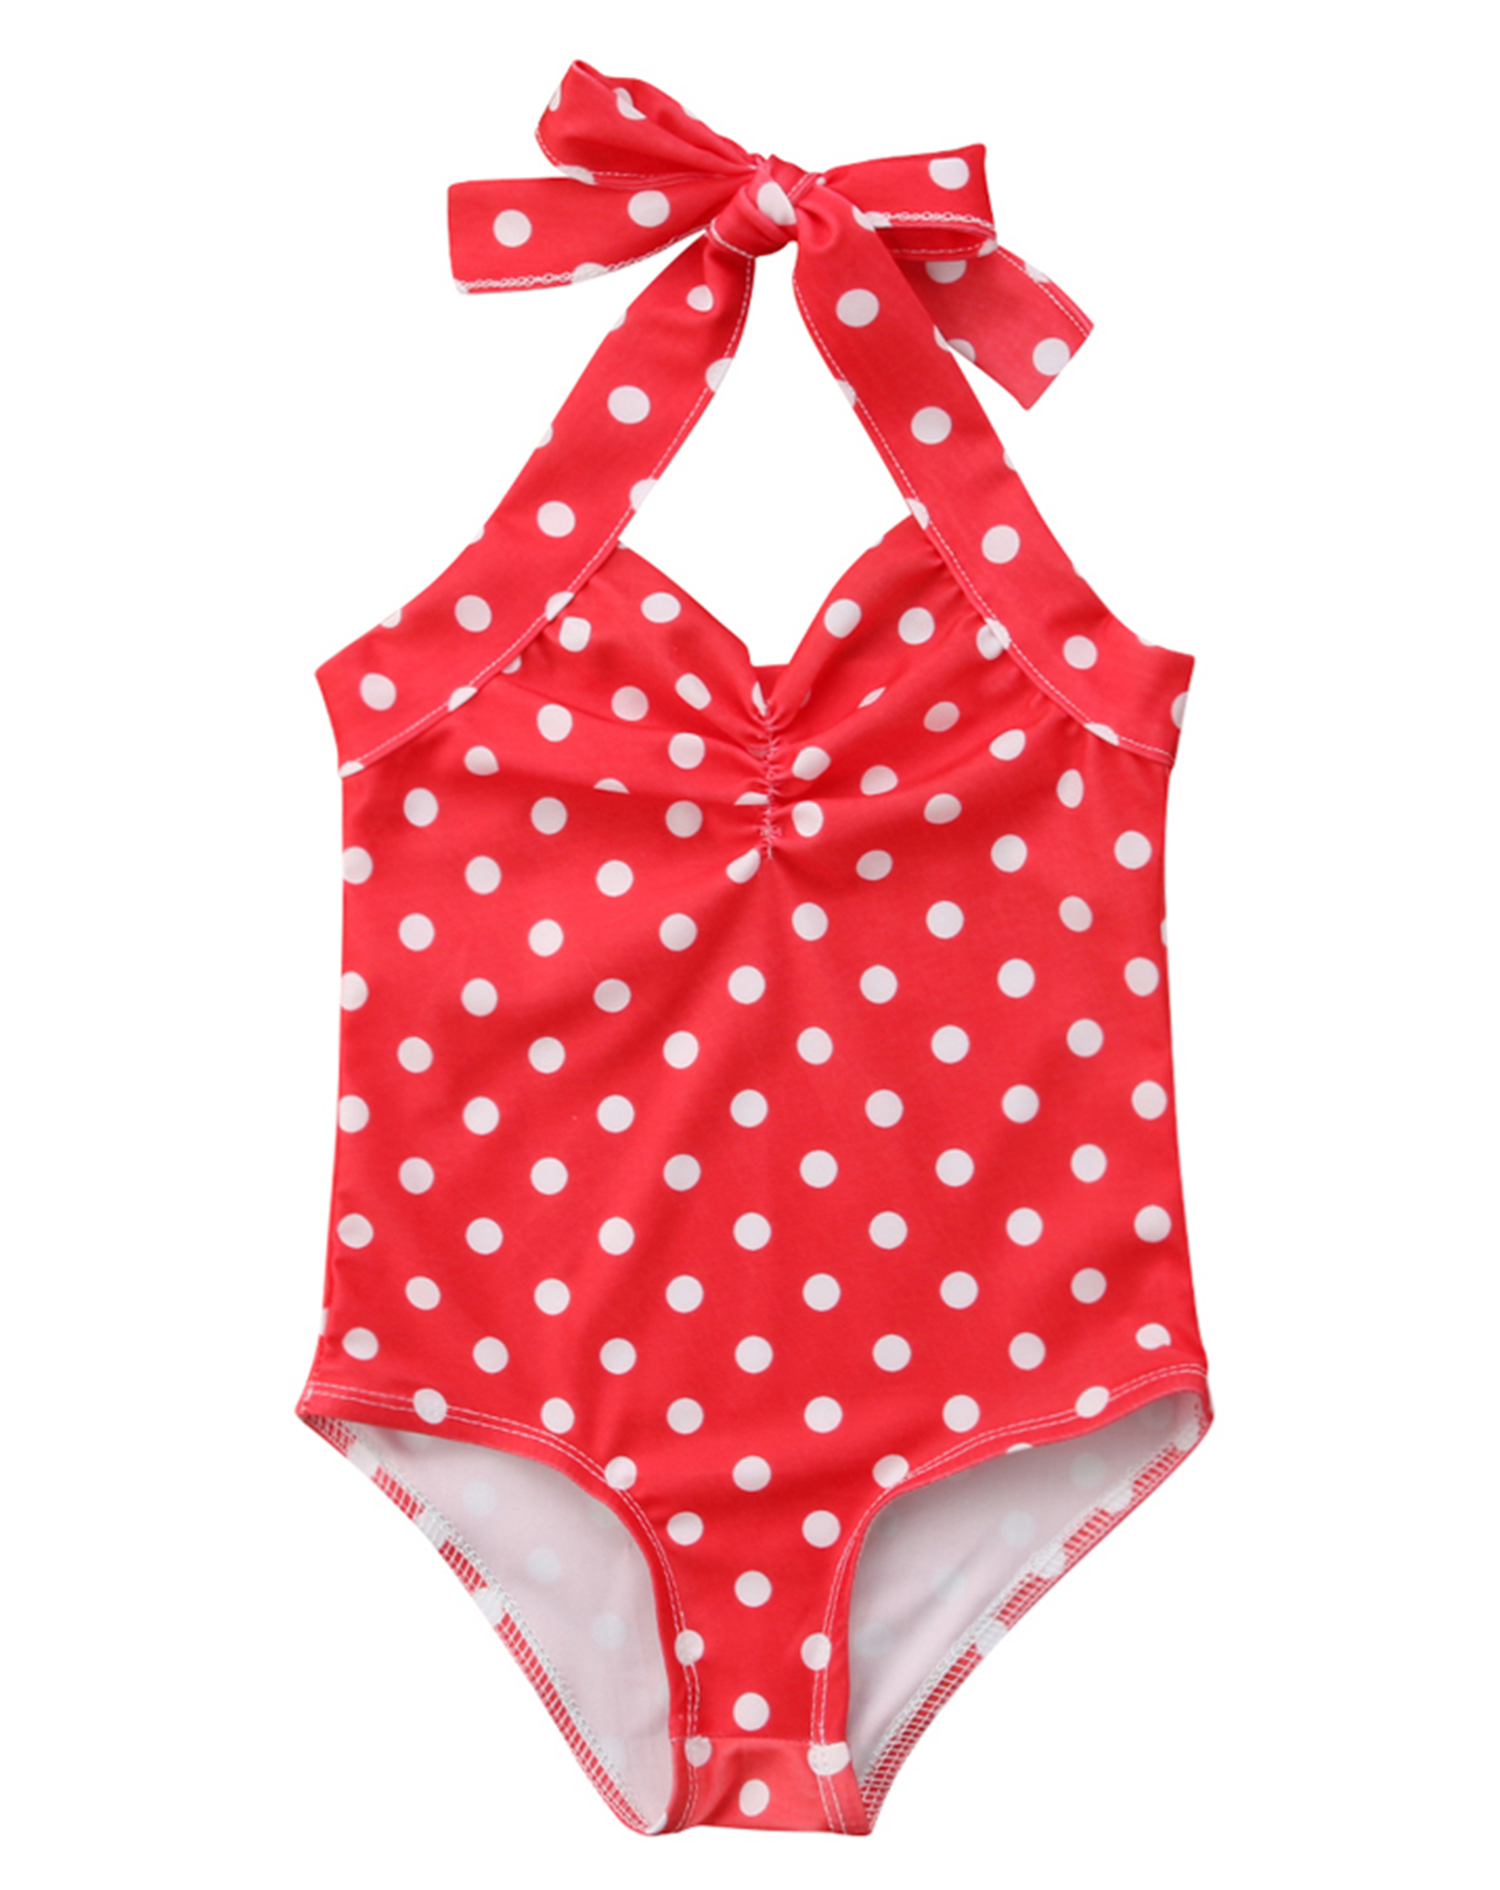 Little Baby Girls Swimming Cap One-Piece Mini Mouse Bikini Beachwear Swimsuit 2 PCs Outfit Polka Dots Beachwear Set